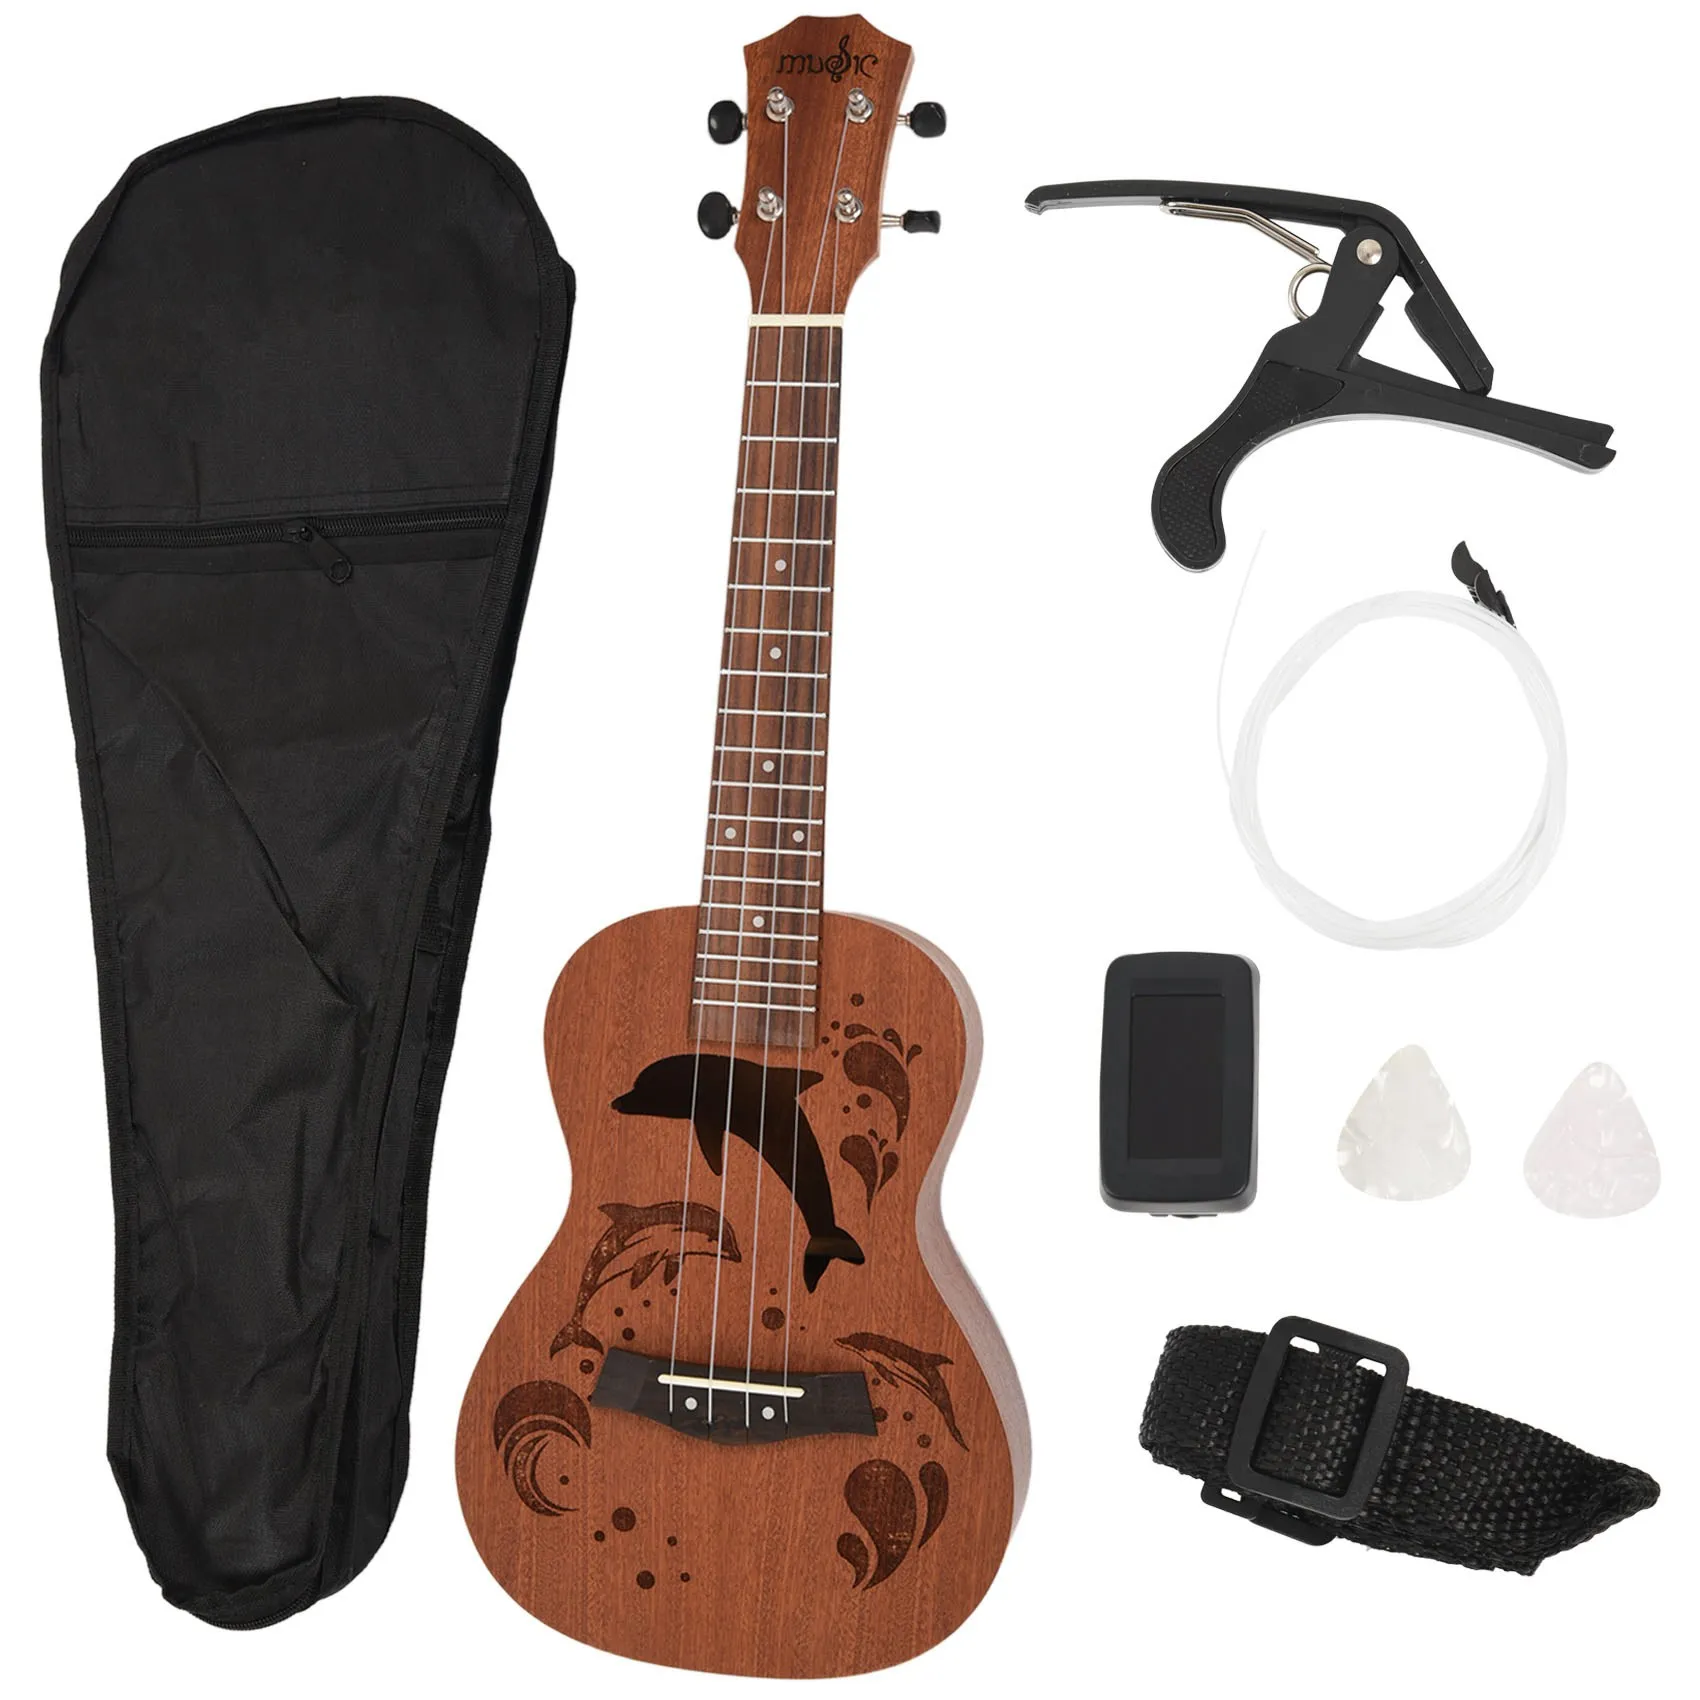 

Concert Ukulele Kits 23 Inch 4 Strings Acoustic Guitar With Bag Tuner Capo Strap Stings Picks For Beginner